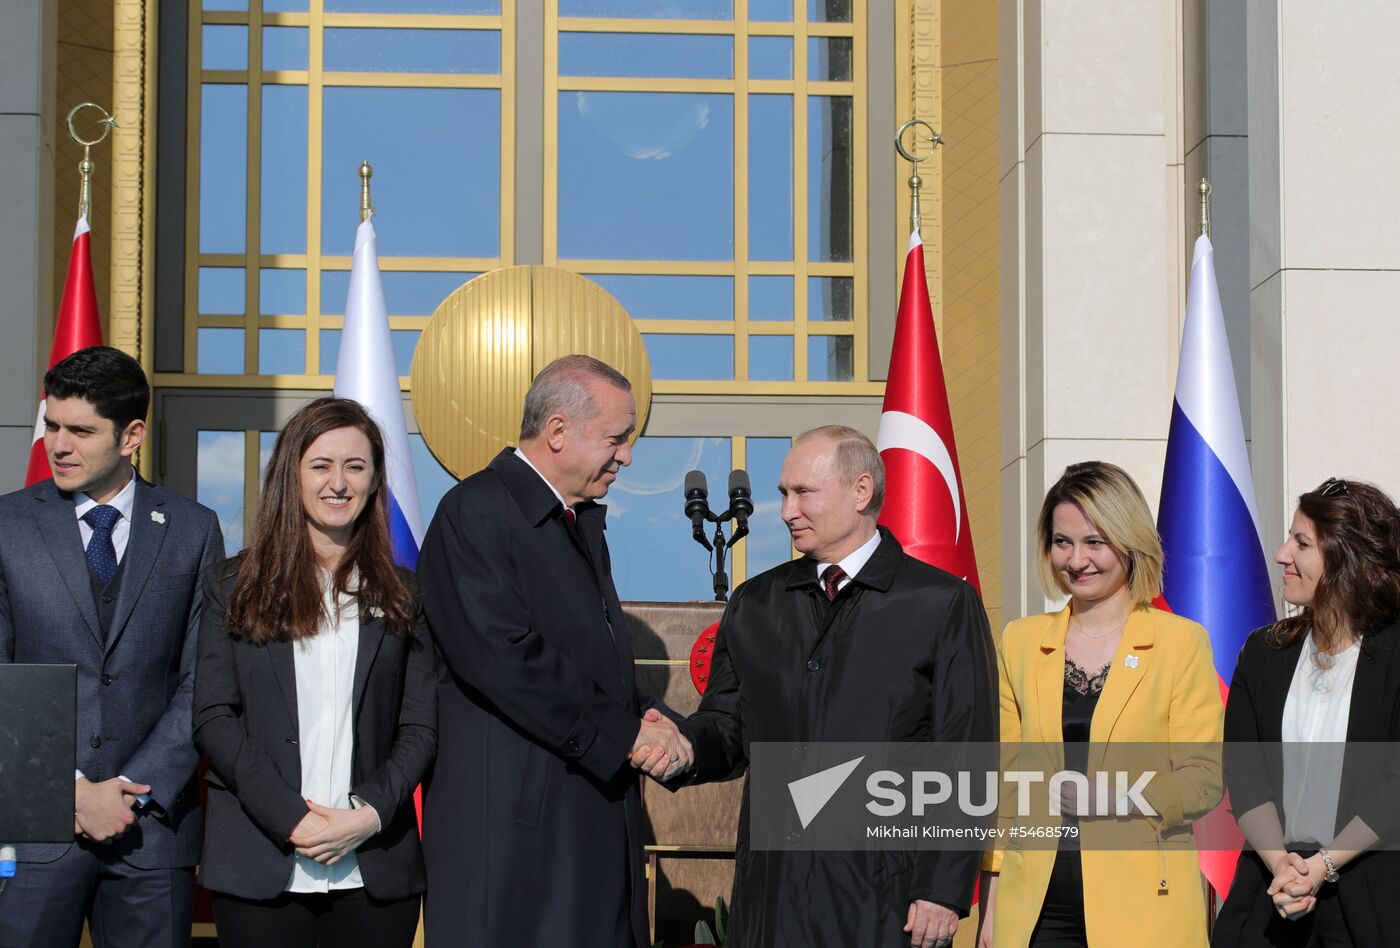 President Vladimir Putin's visit to Turkey